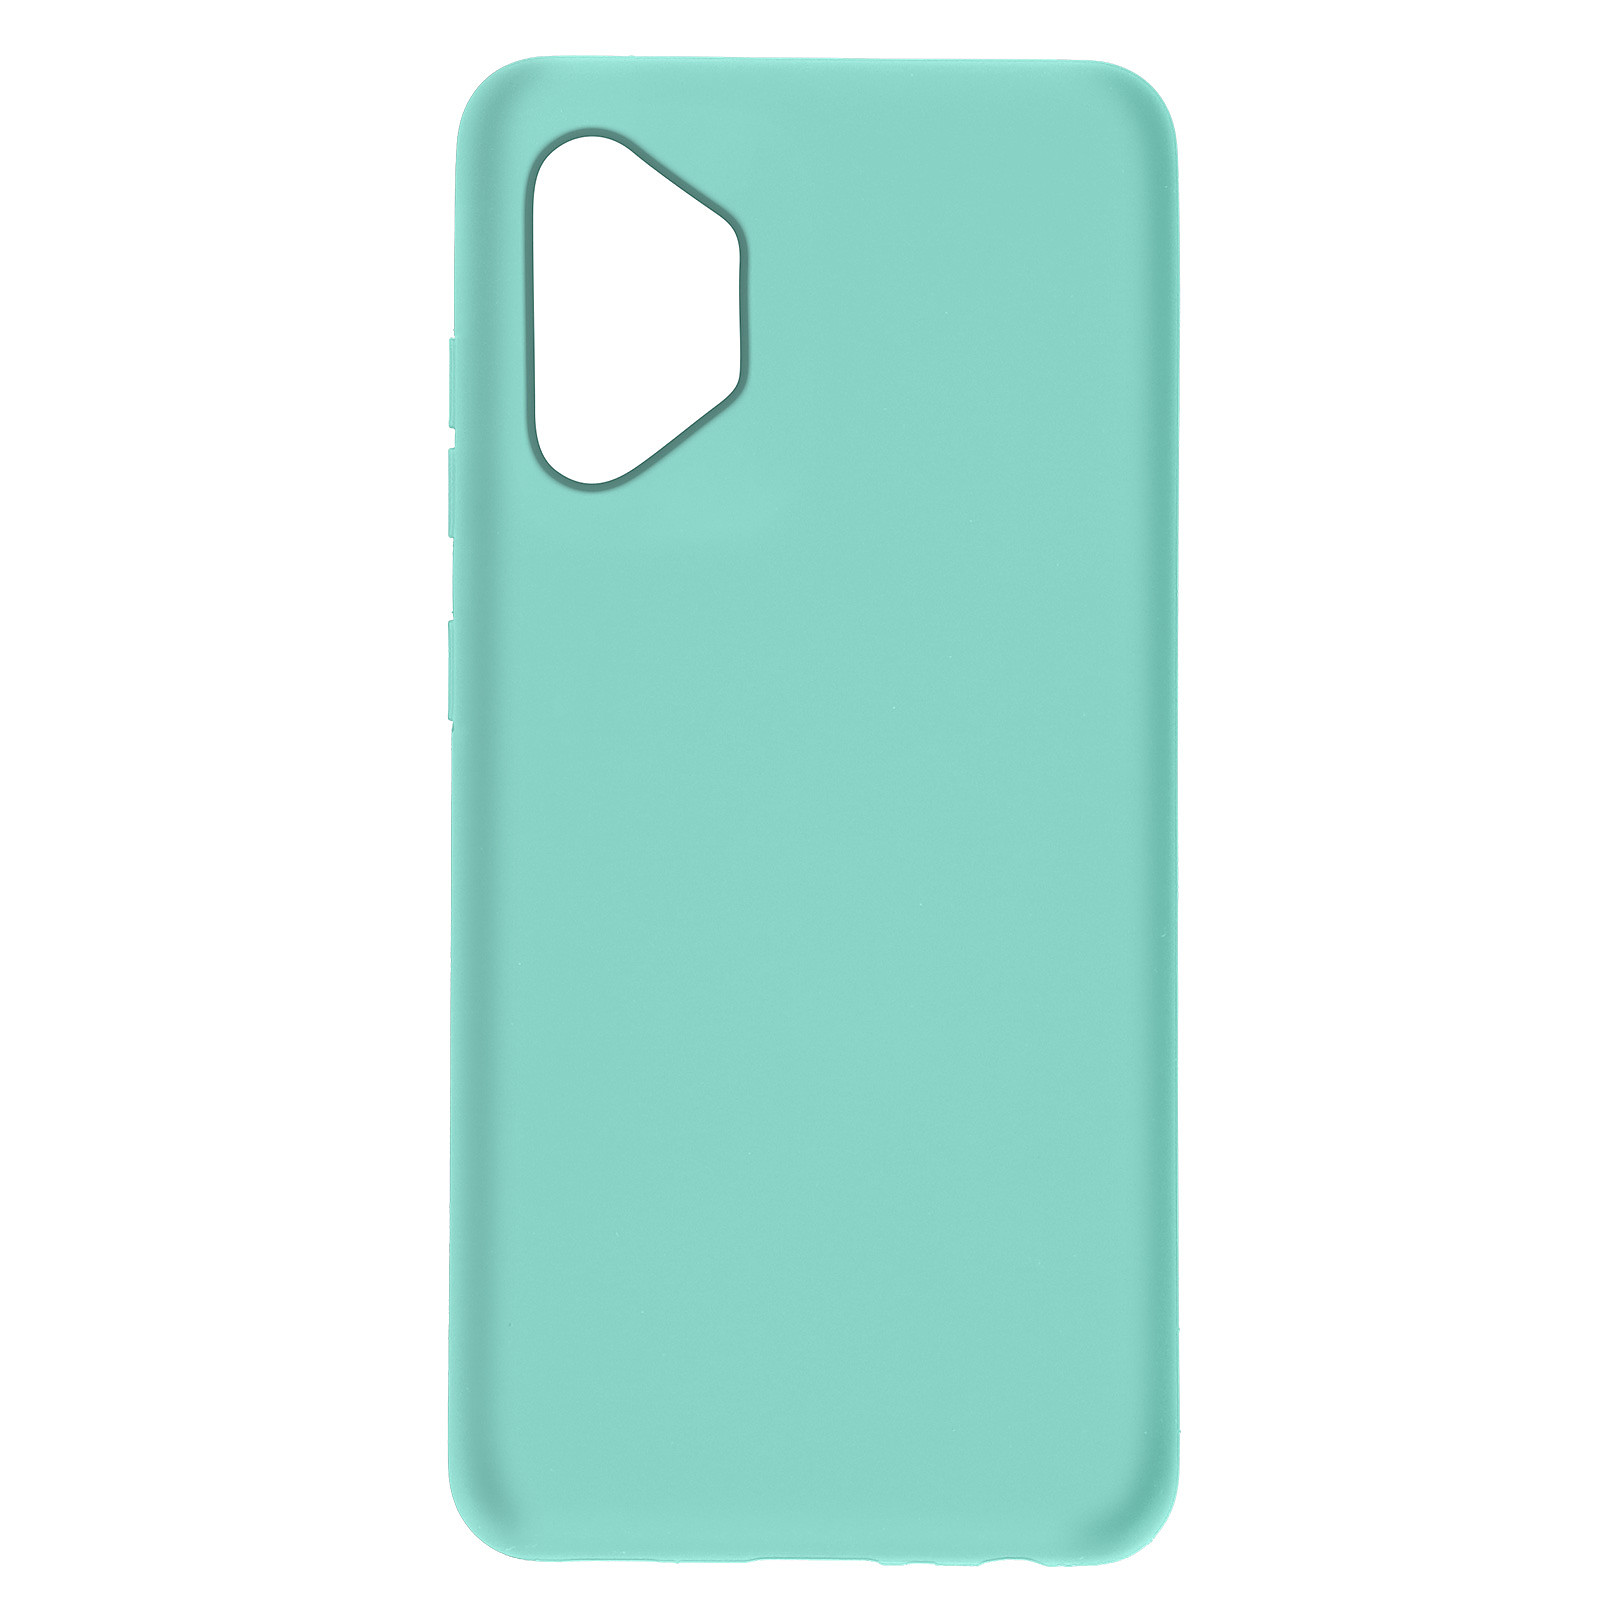 Avizar Coque pour Samsung Galaxy A32 5G Silicone Semi-rigide Finition Soft Touch Fine turquoise - Coque telephone Avizar